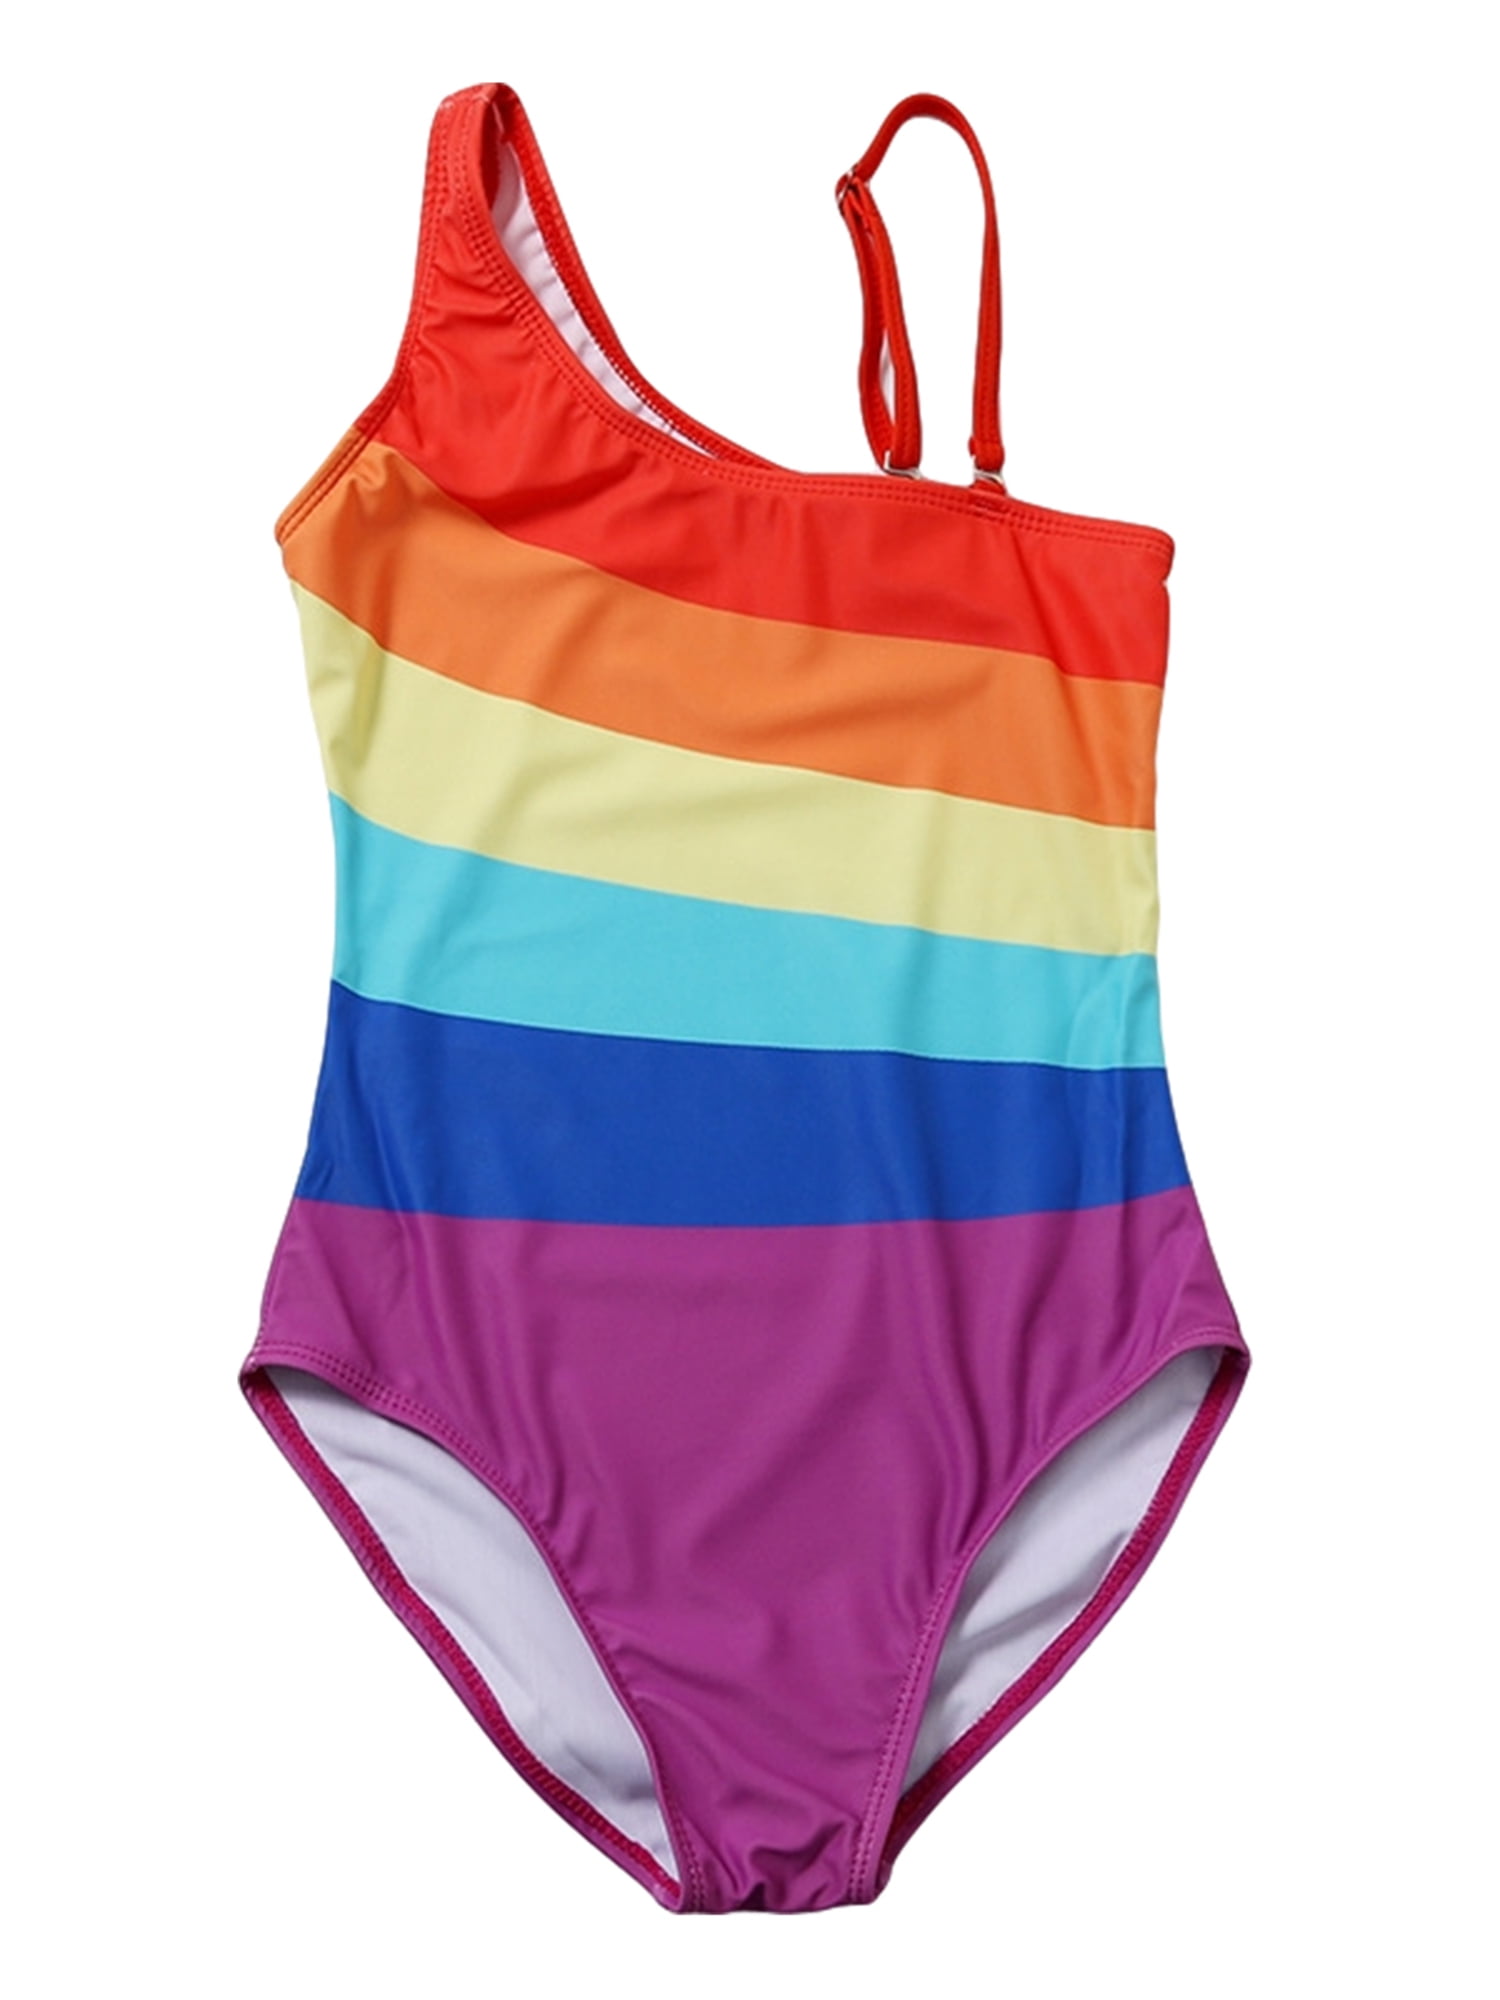 Rainbow One-Piece Swimsuit